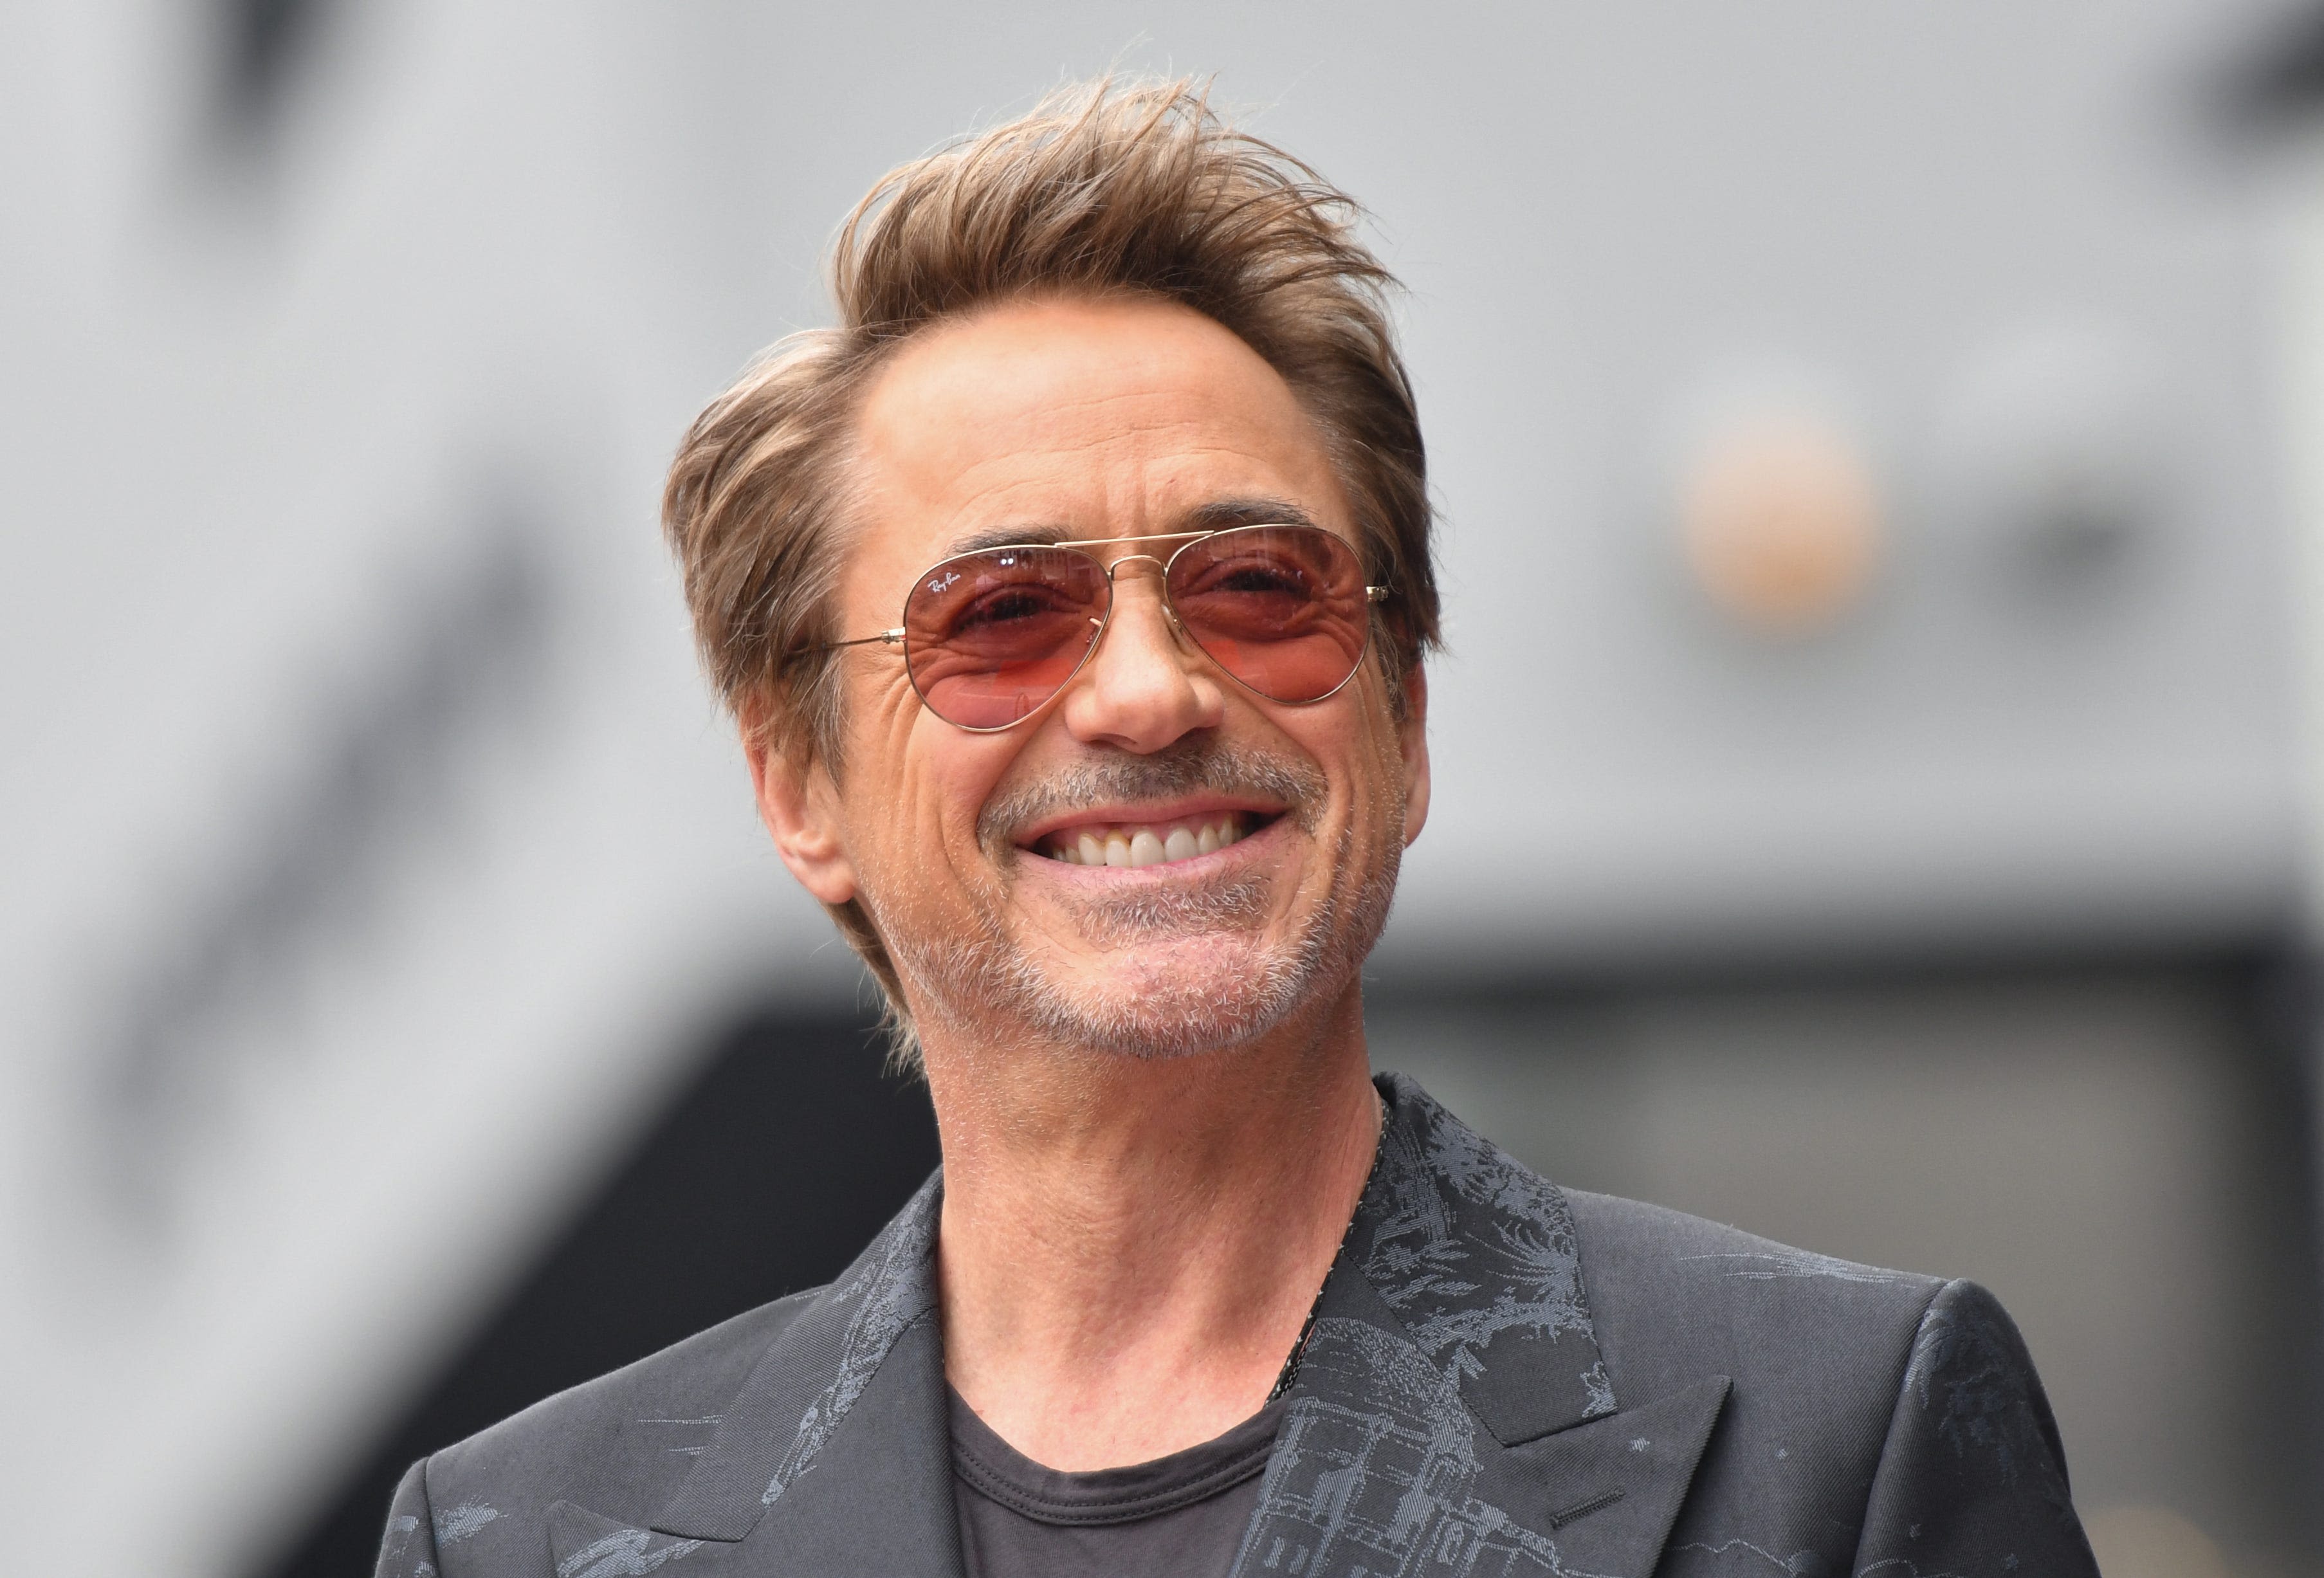 Marvel at Comic-Con: 'Avengers' star Robert Downey Jr. returns – but as Doctor Doom